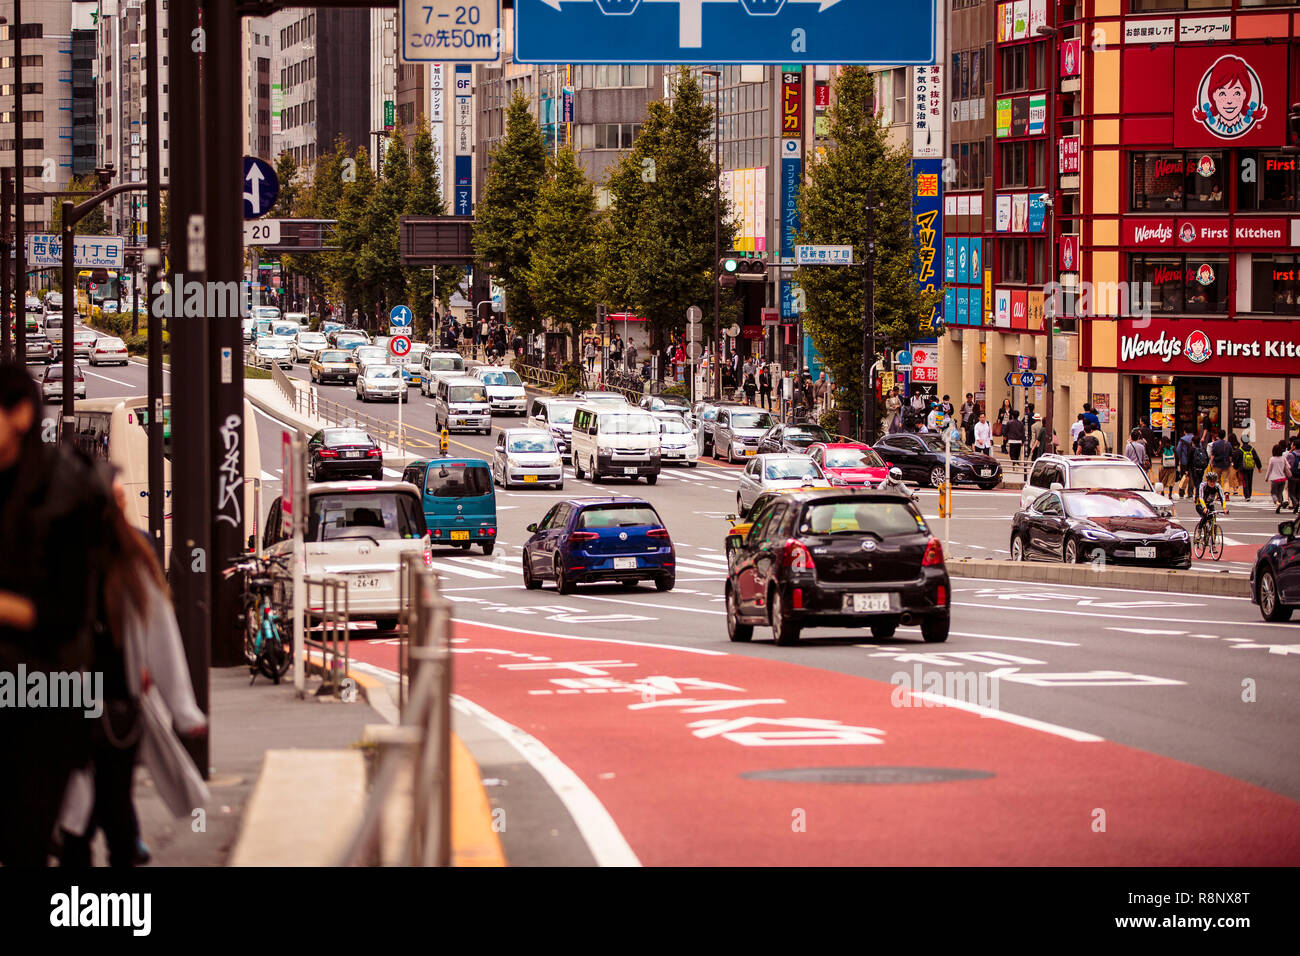 A busy street scene in the Shinjuku area of Tokyo, Japan Stock Photo